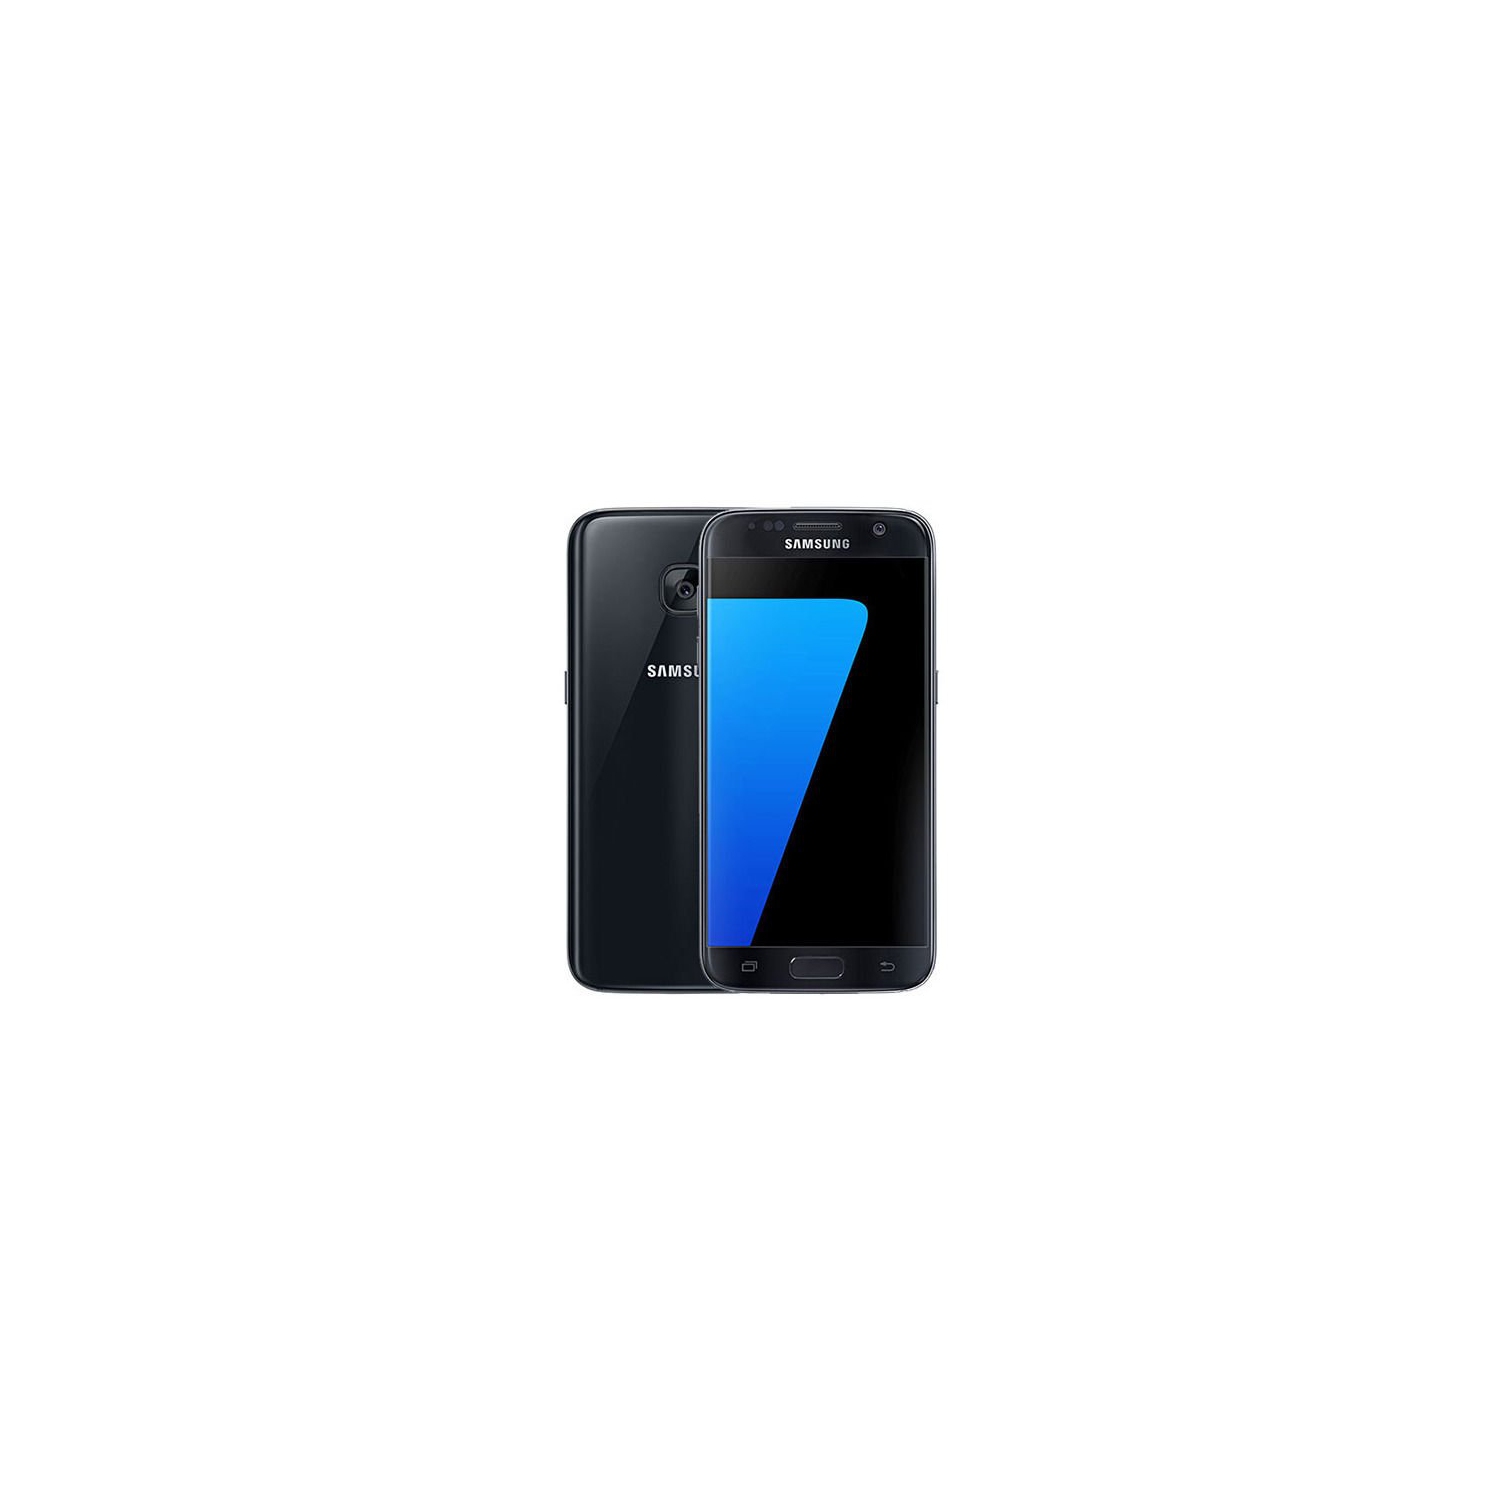 Refurbished (Excellent) - Samsung Galaxy S7 32GB Smartphone - Black Onyx - Unlocked - Manufacturer Certified Refurbished